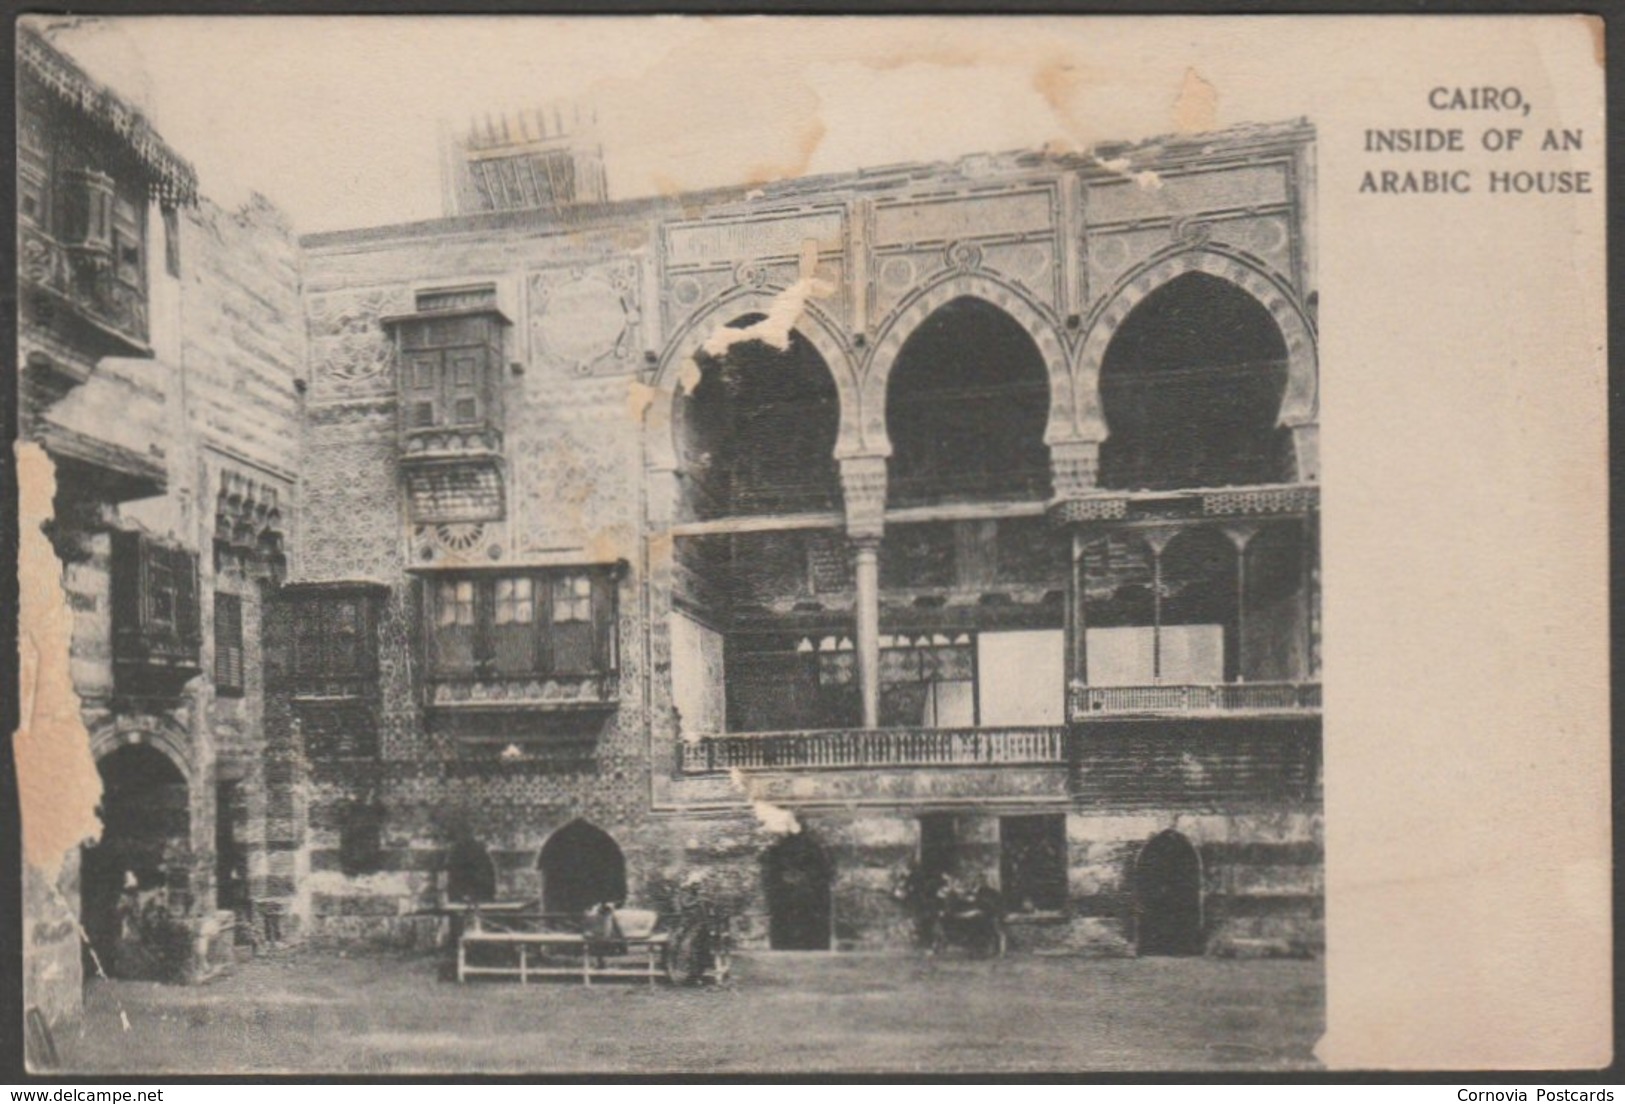 Inside Of An Arabic House, Cairo, C.1905 - U/B Postcard - Cairo